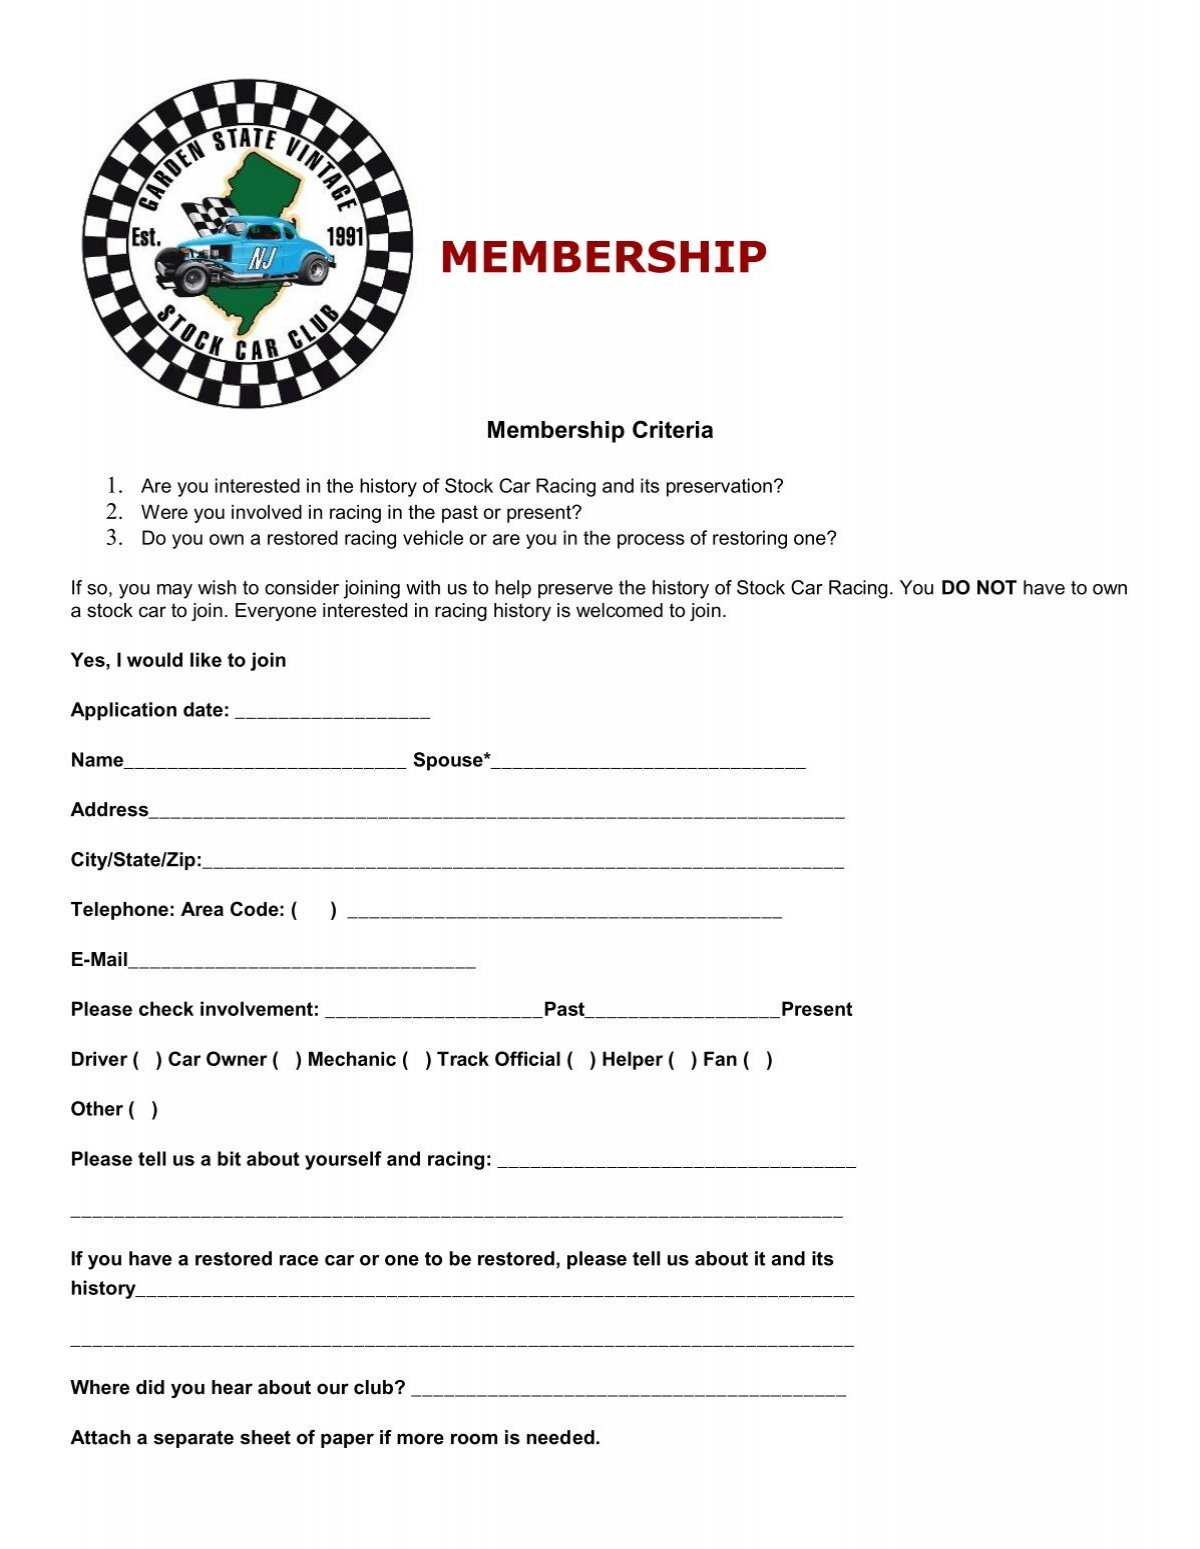 membership-form-garden-state-vintage-stock-car-club